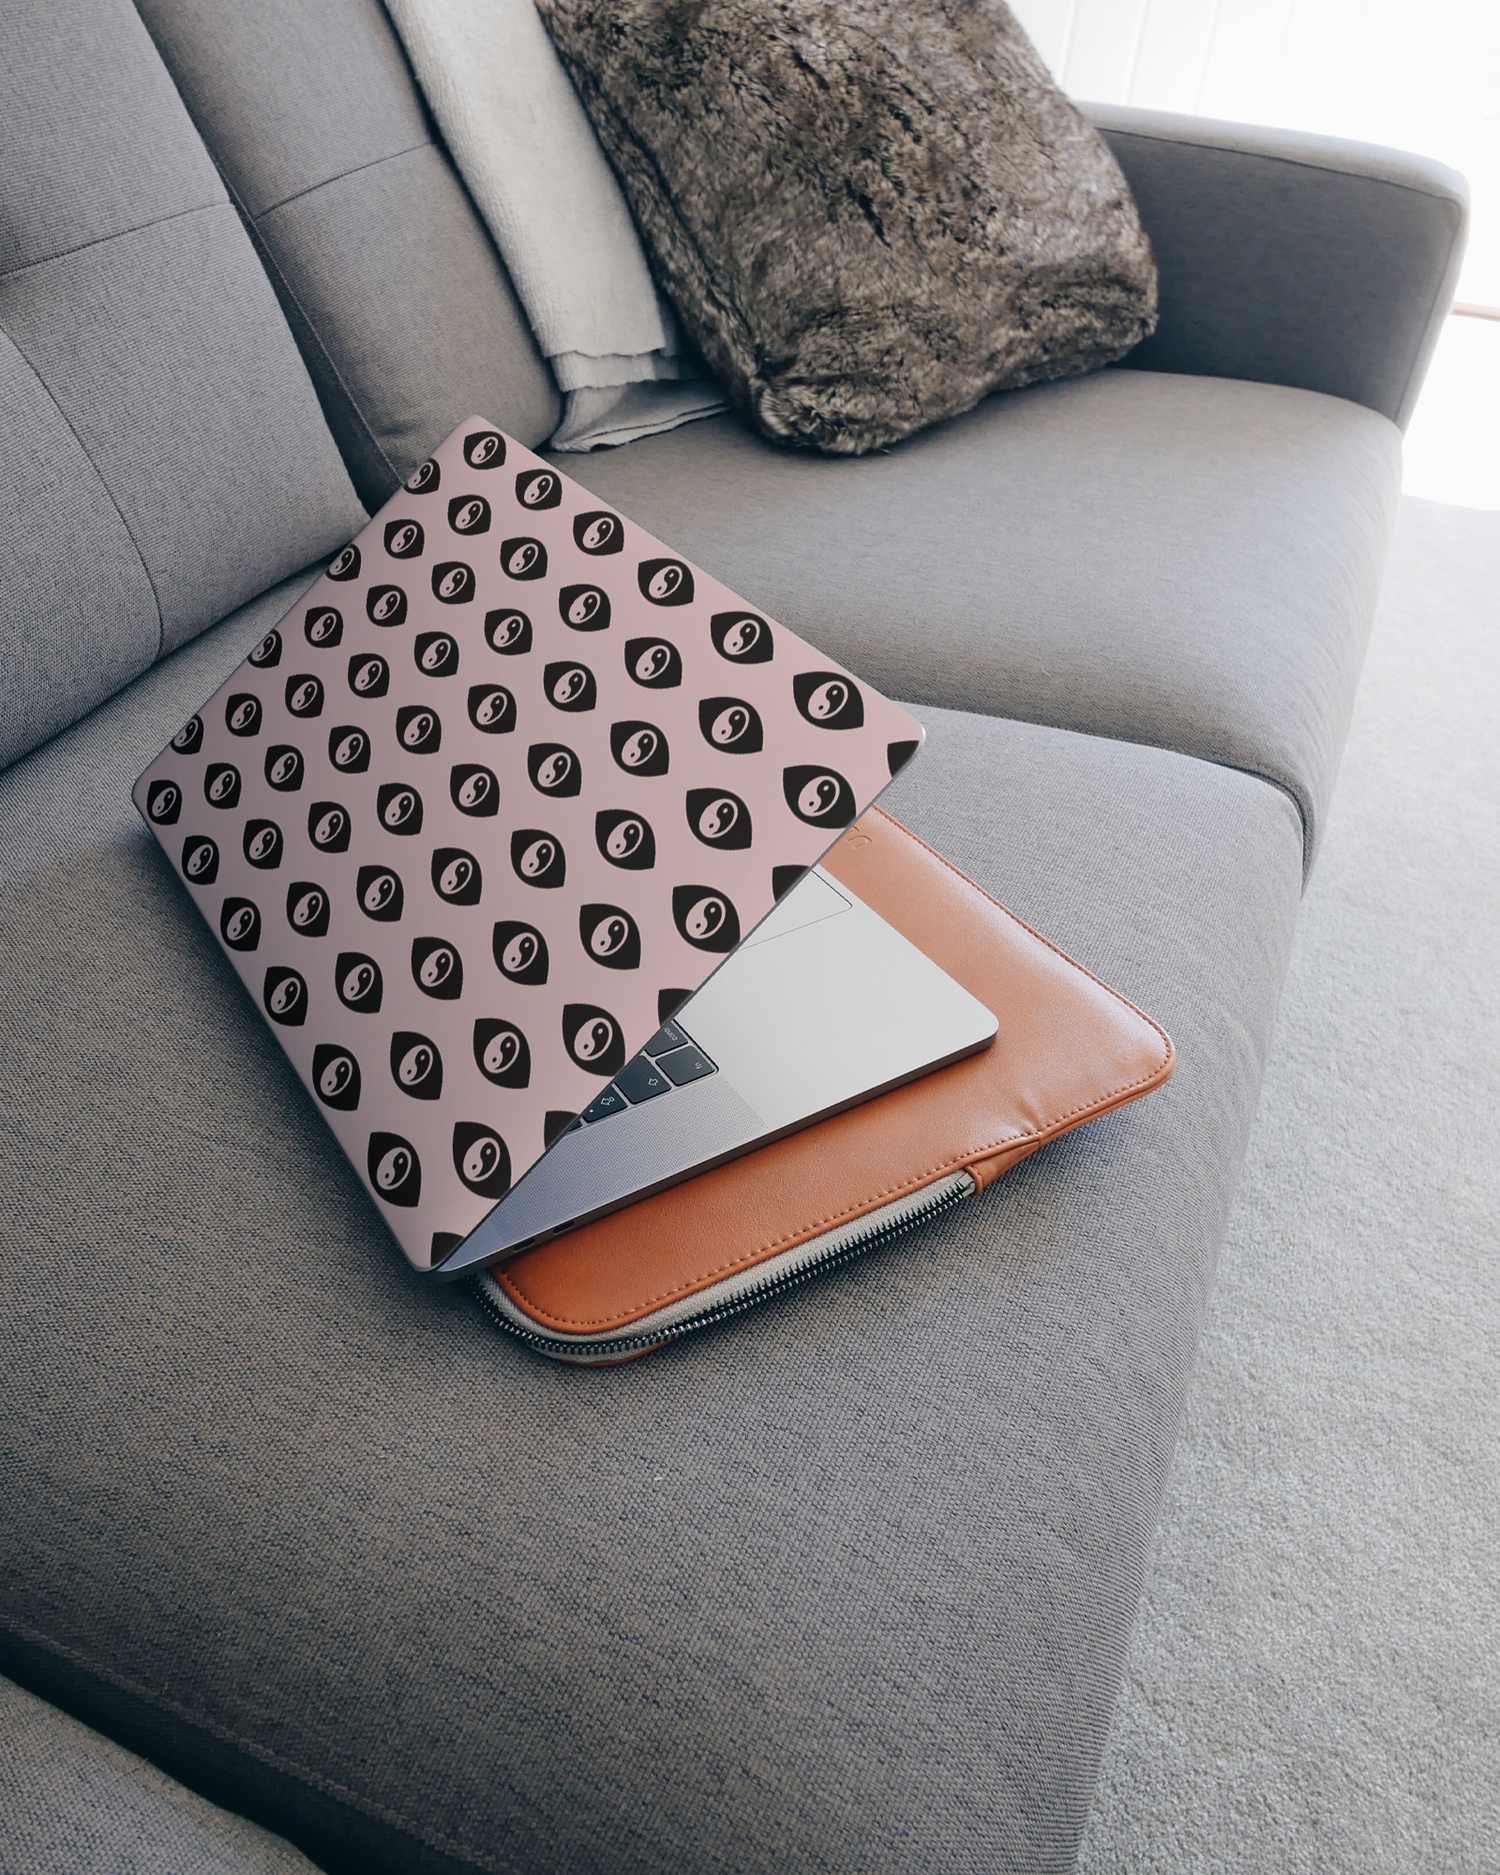 Yin Yang Repeat Laptop Aufkleber für 15 Zoll Apple MacBooks auf dem Sofa